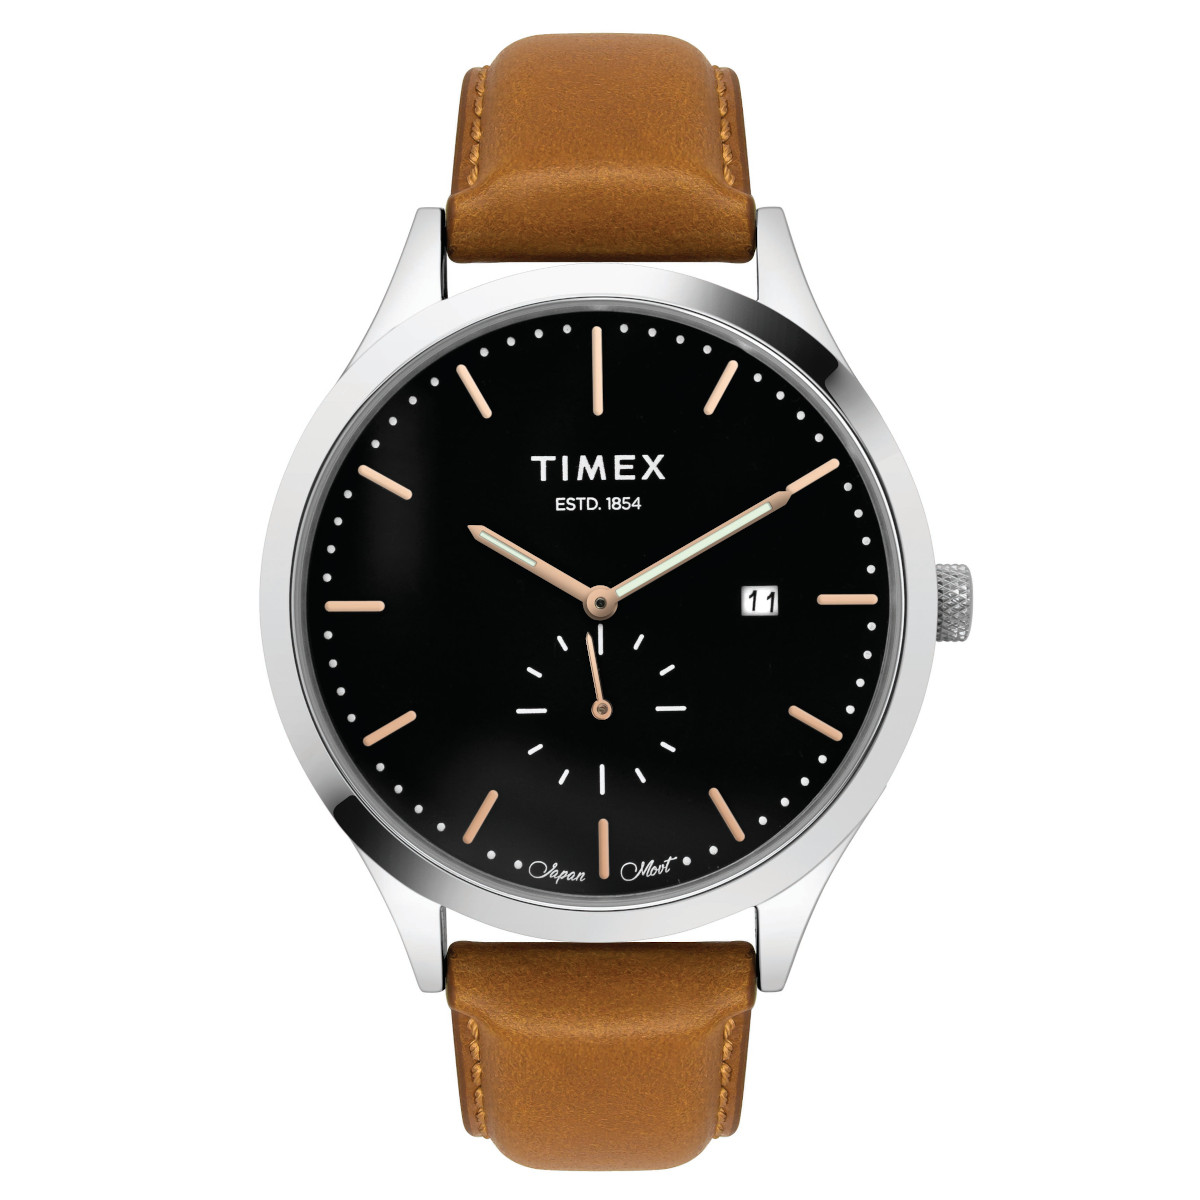 Timex - W A De Silva & Co